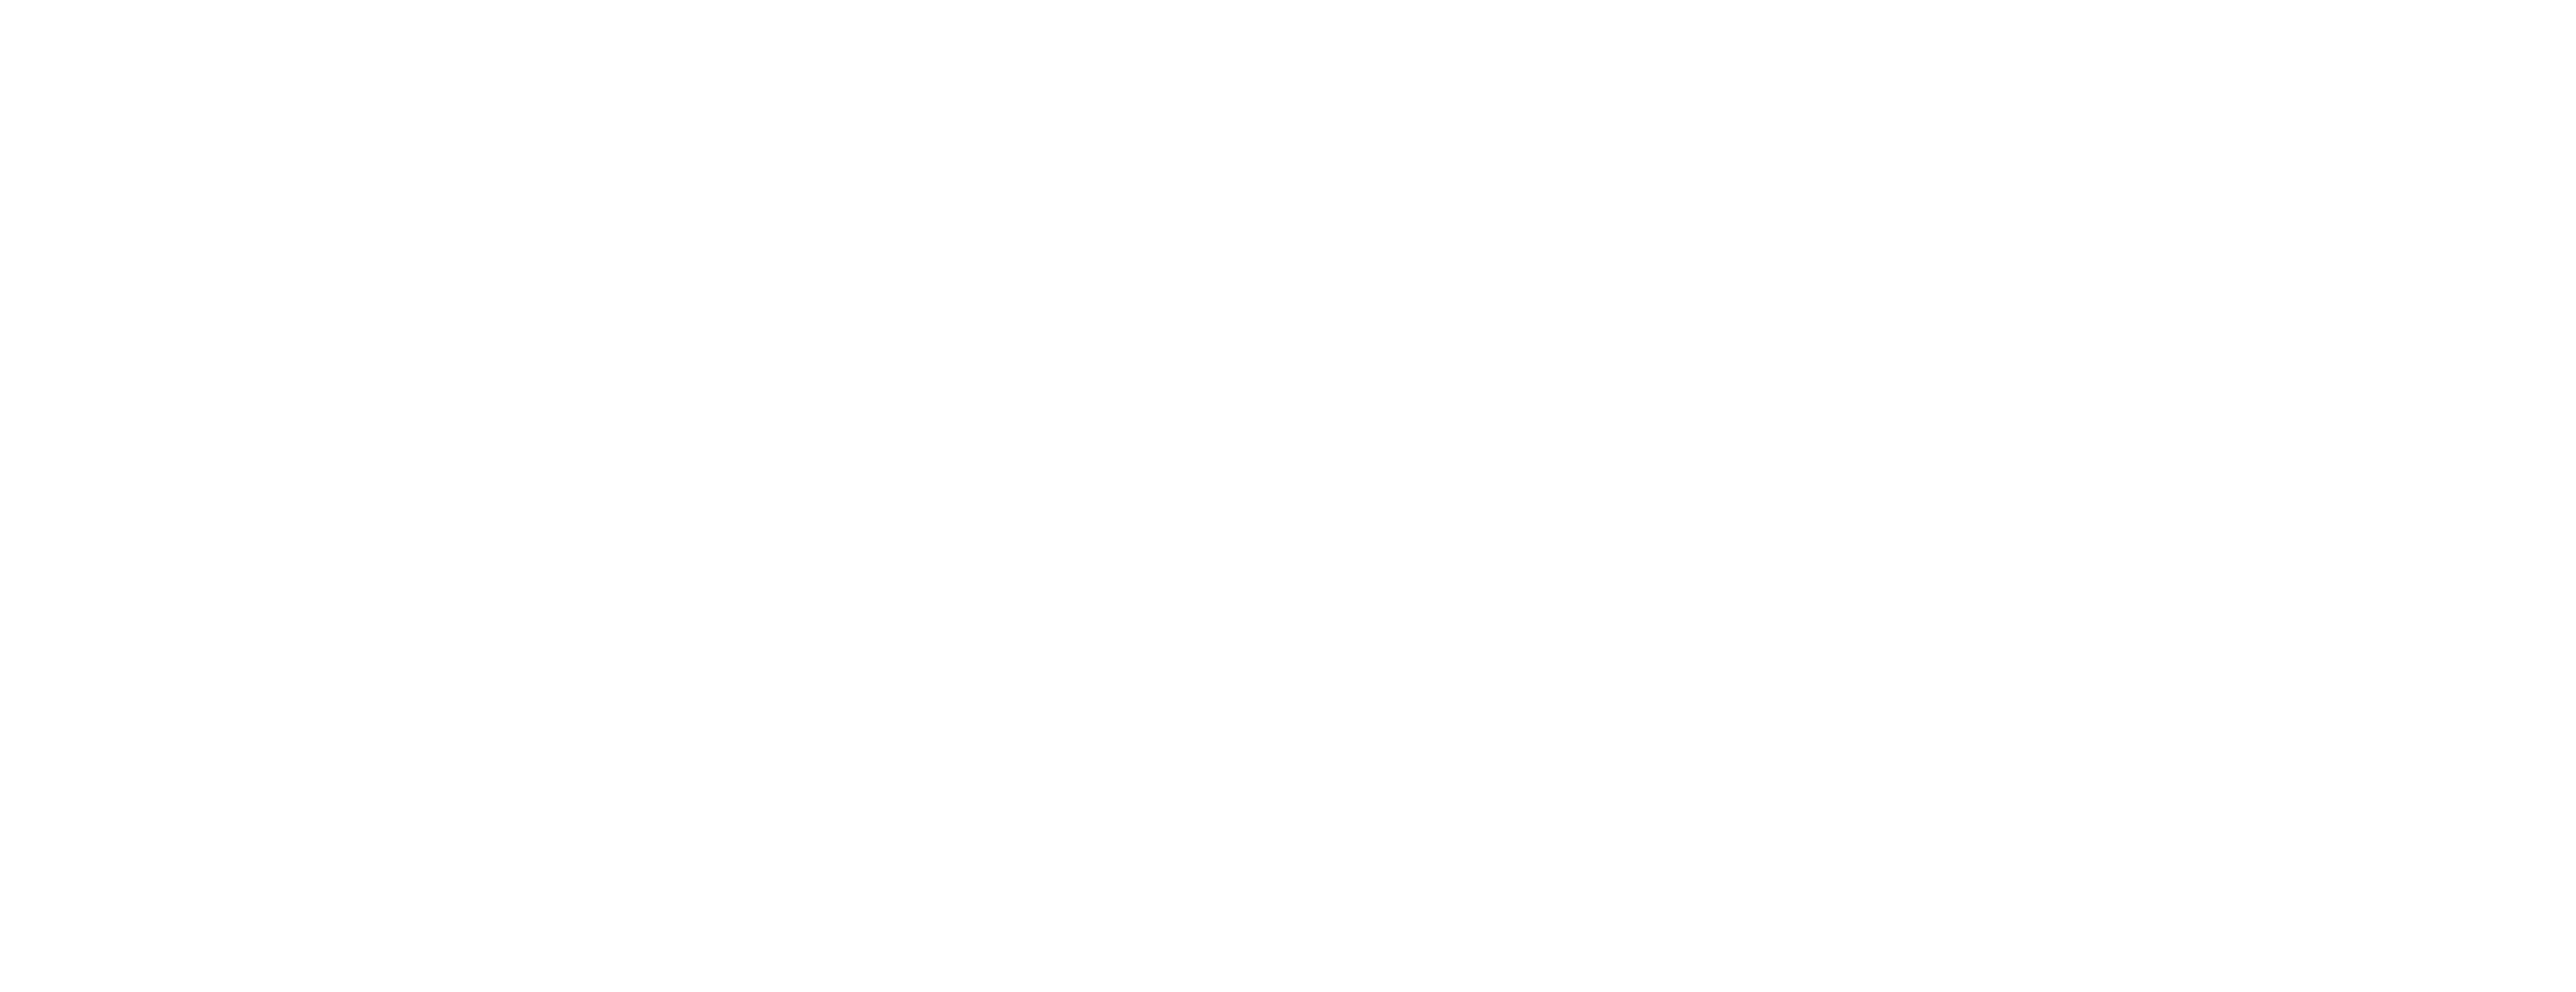 Biogenesis horizontal logo white